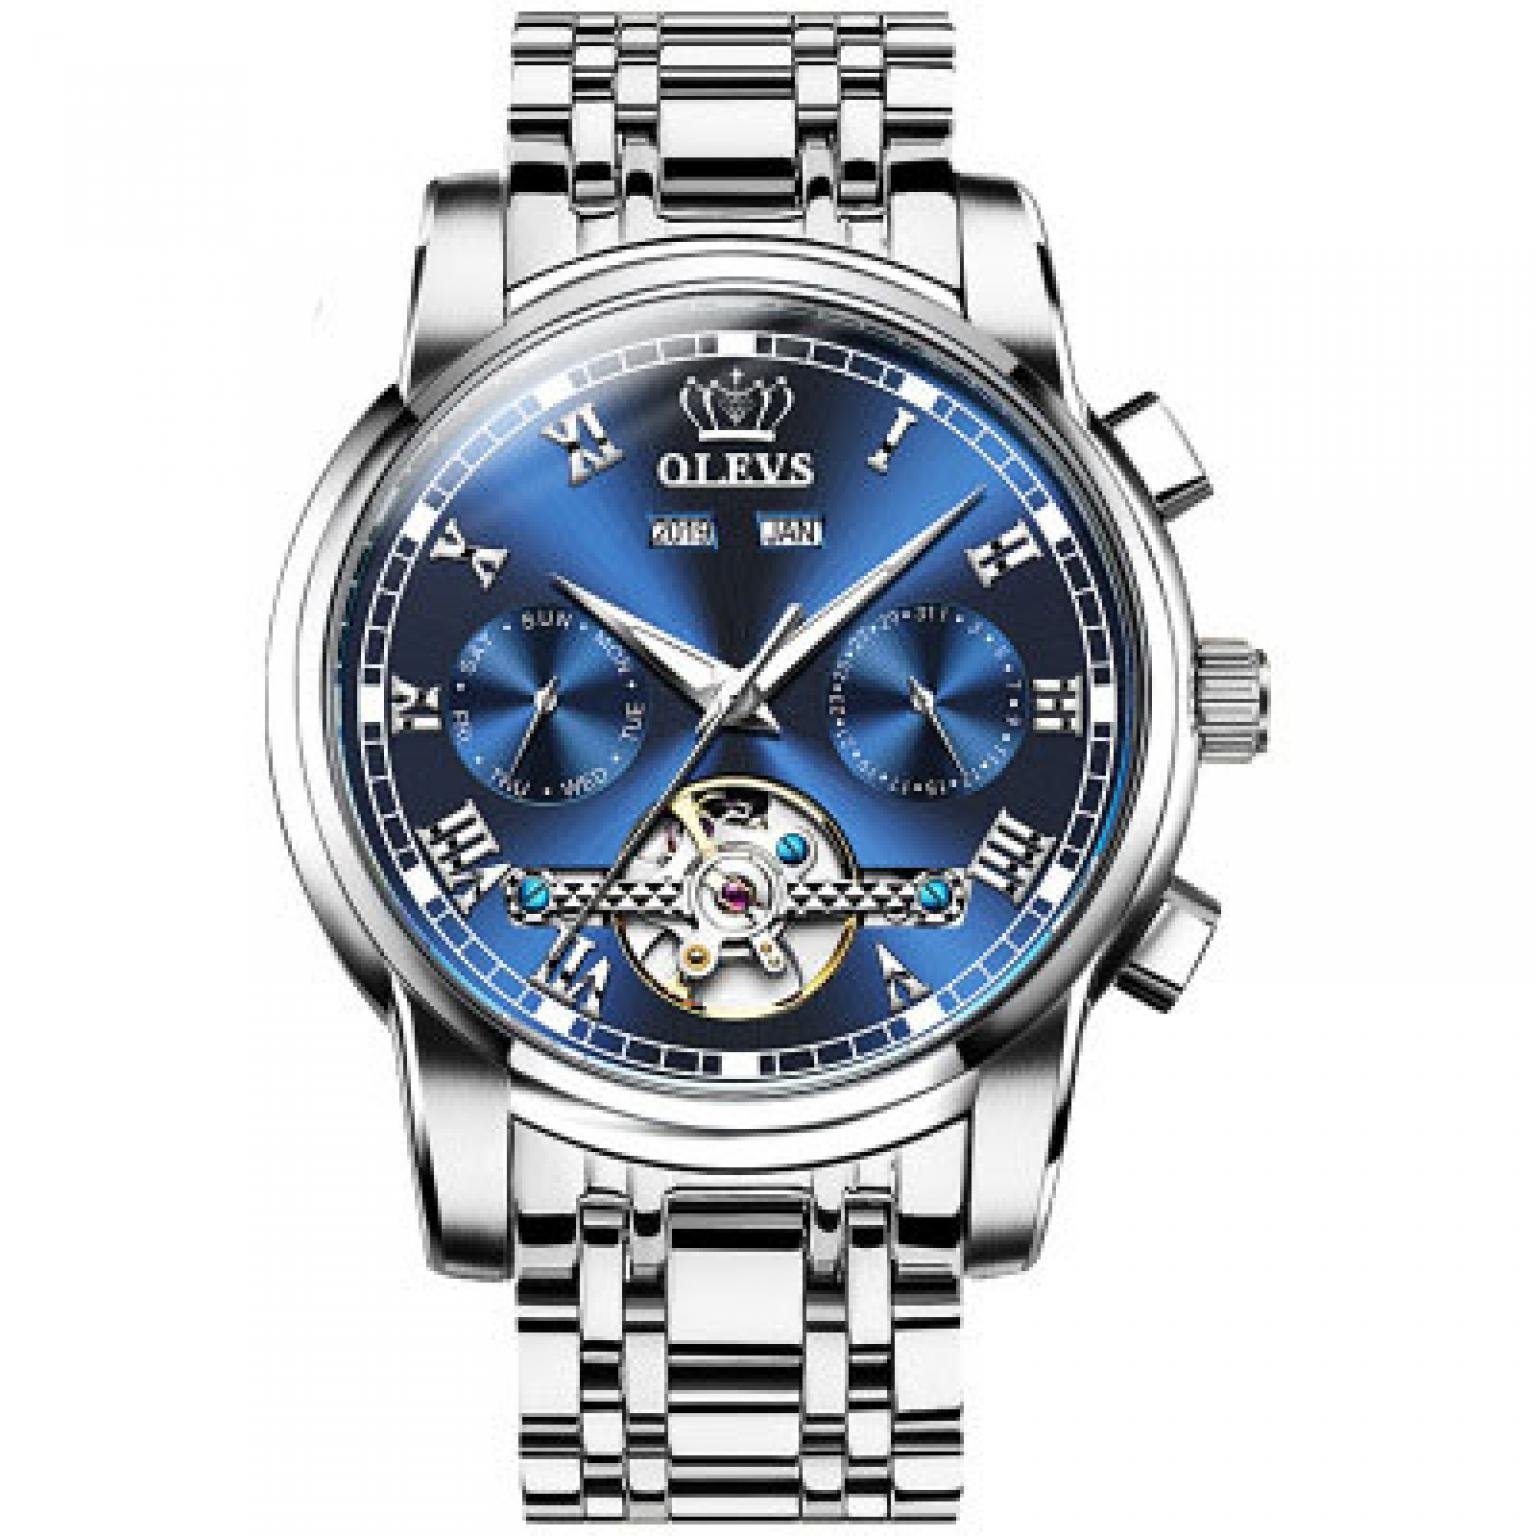  ORIGINAL OLEVS Watch Men Automatic Mechanical Wristwatch Top Brand Luxury Stainless Steel Waterproof Date Clock Business Sports Watches(OLEVS 6607)